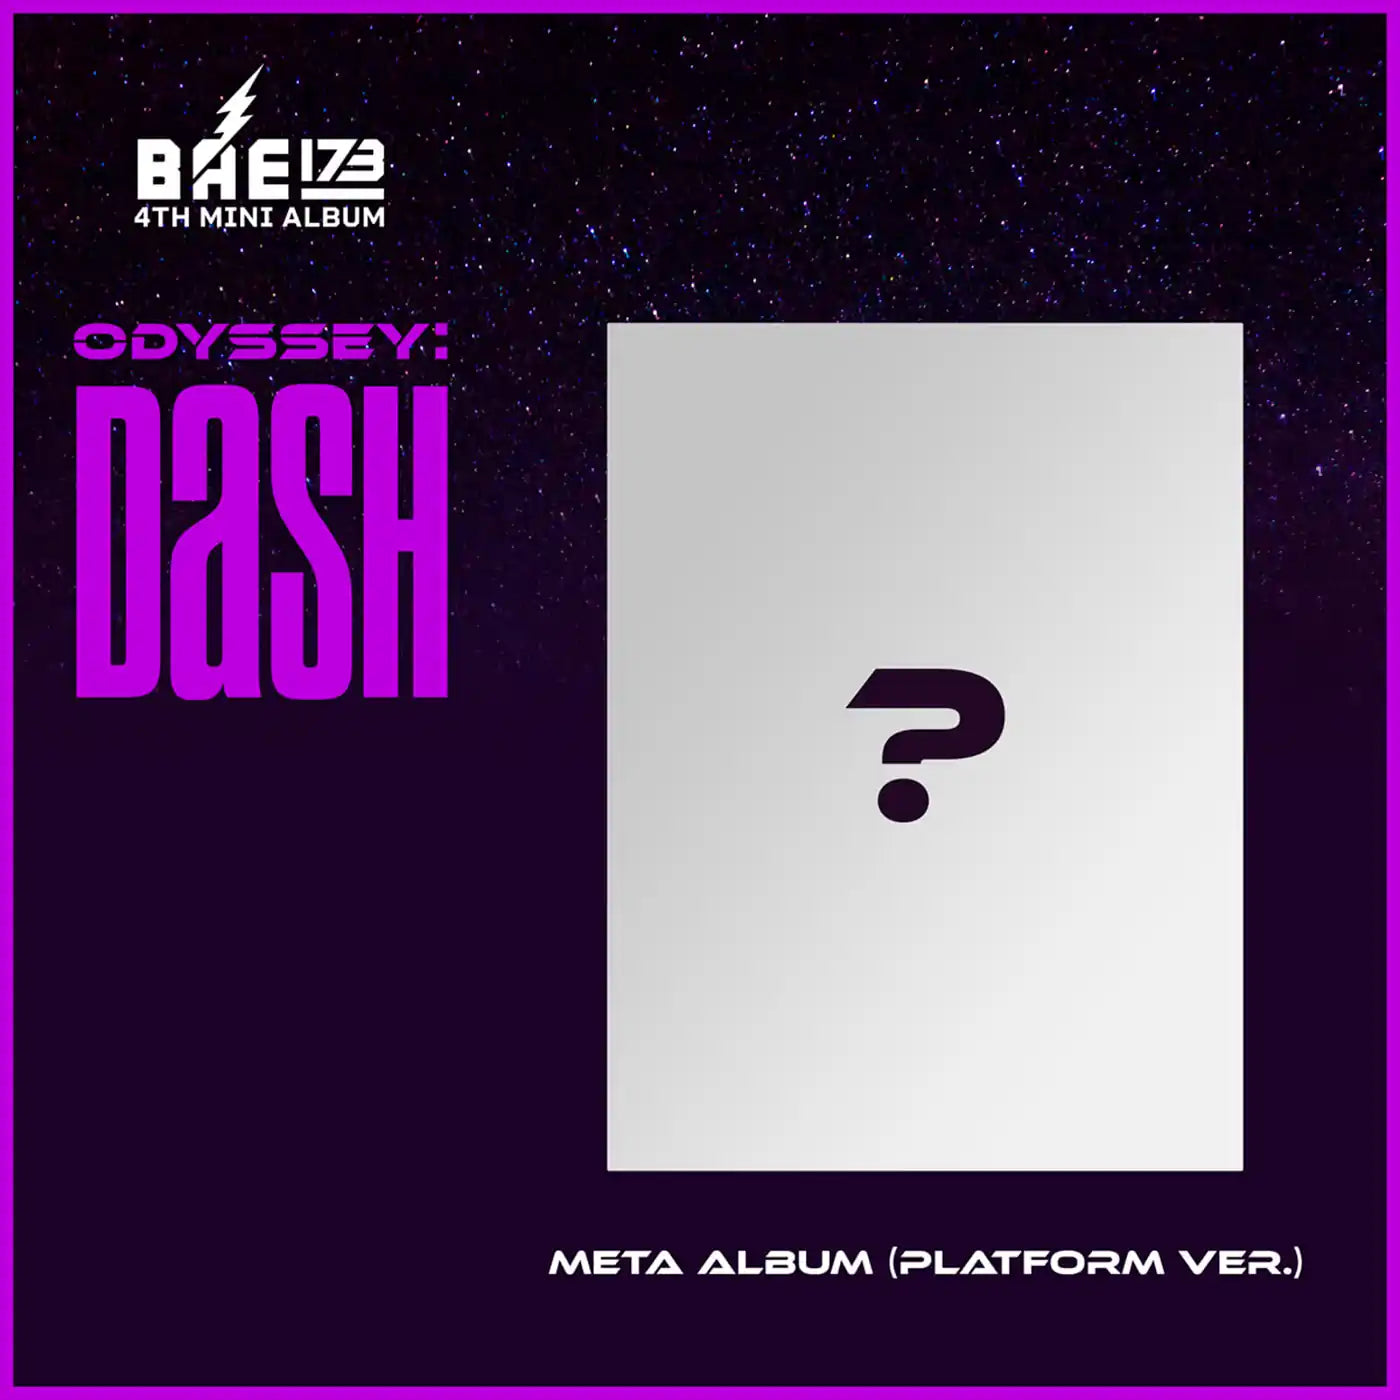 BAE173 - Odyssey: DaSH (Platform Ver.)